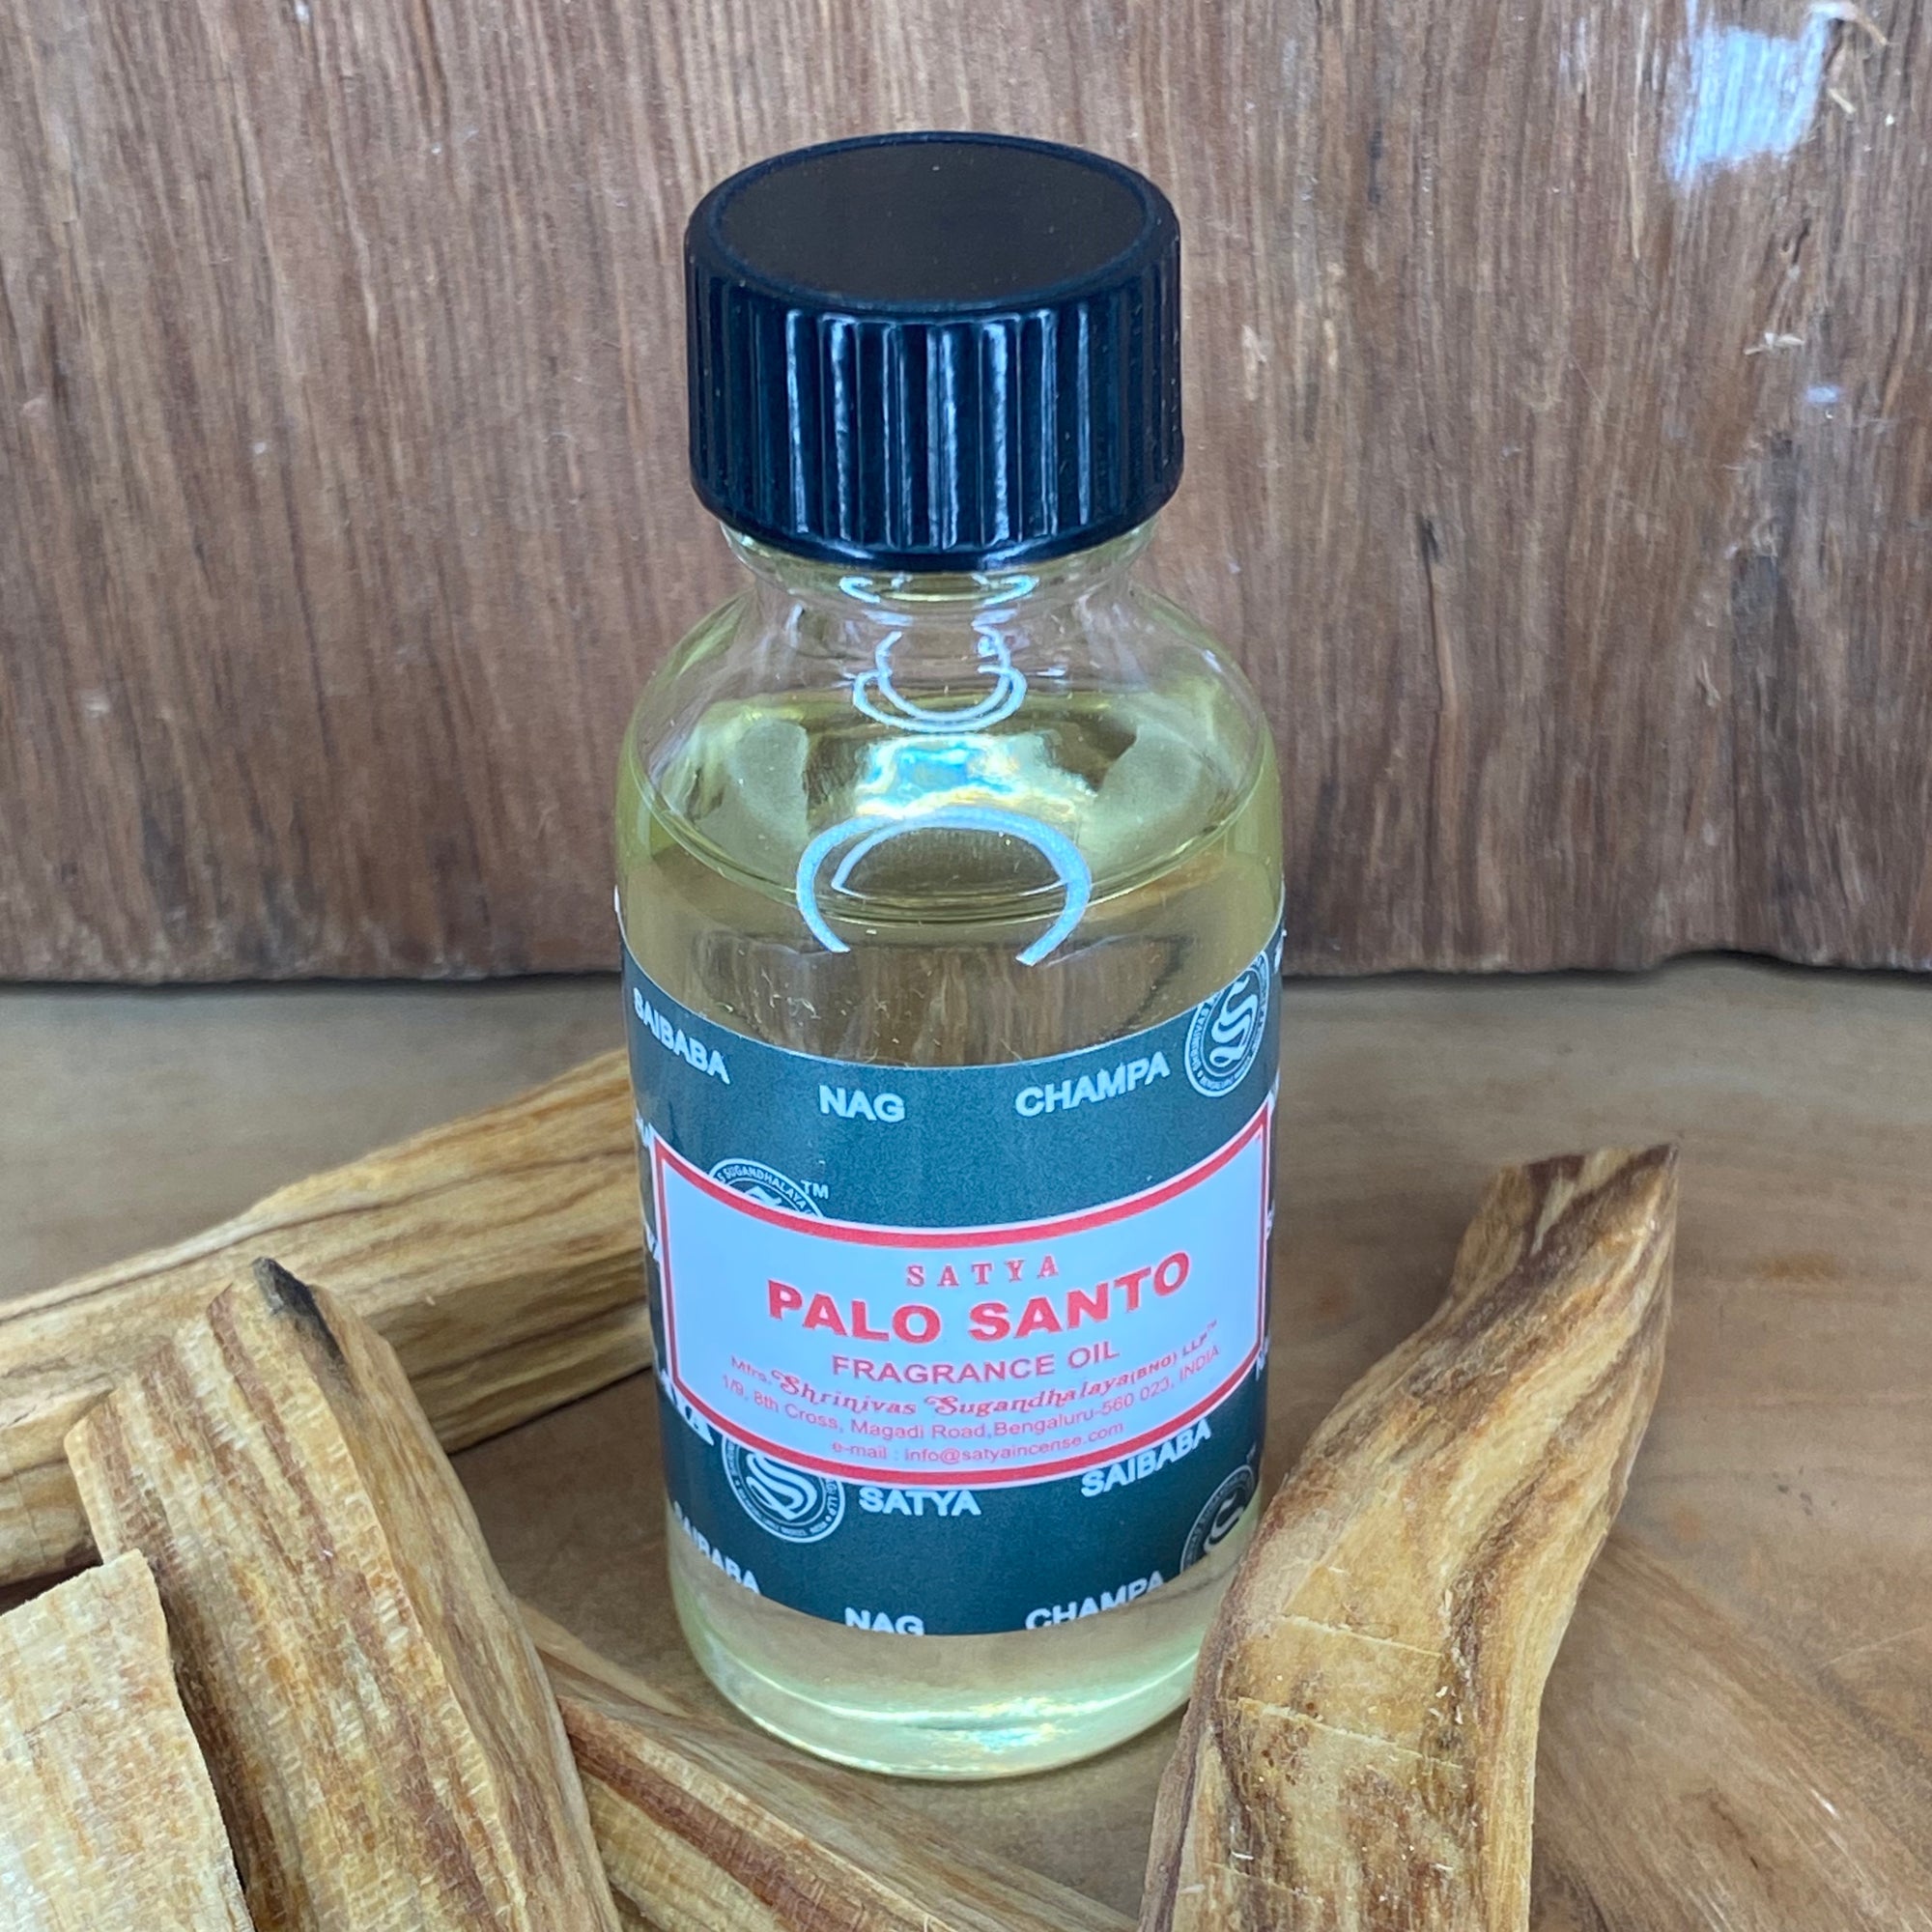 Satya Palo Santo Fragrance Oil 30ml - The Spirit of Life